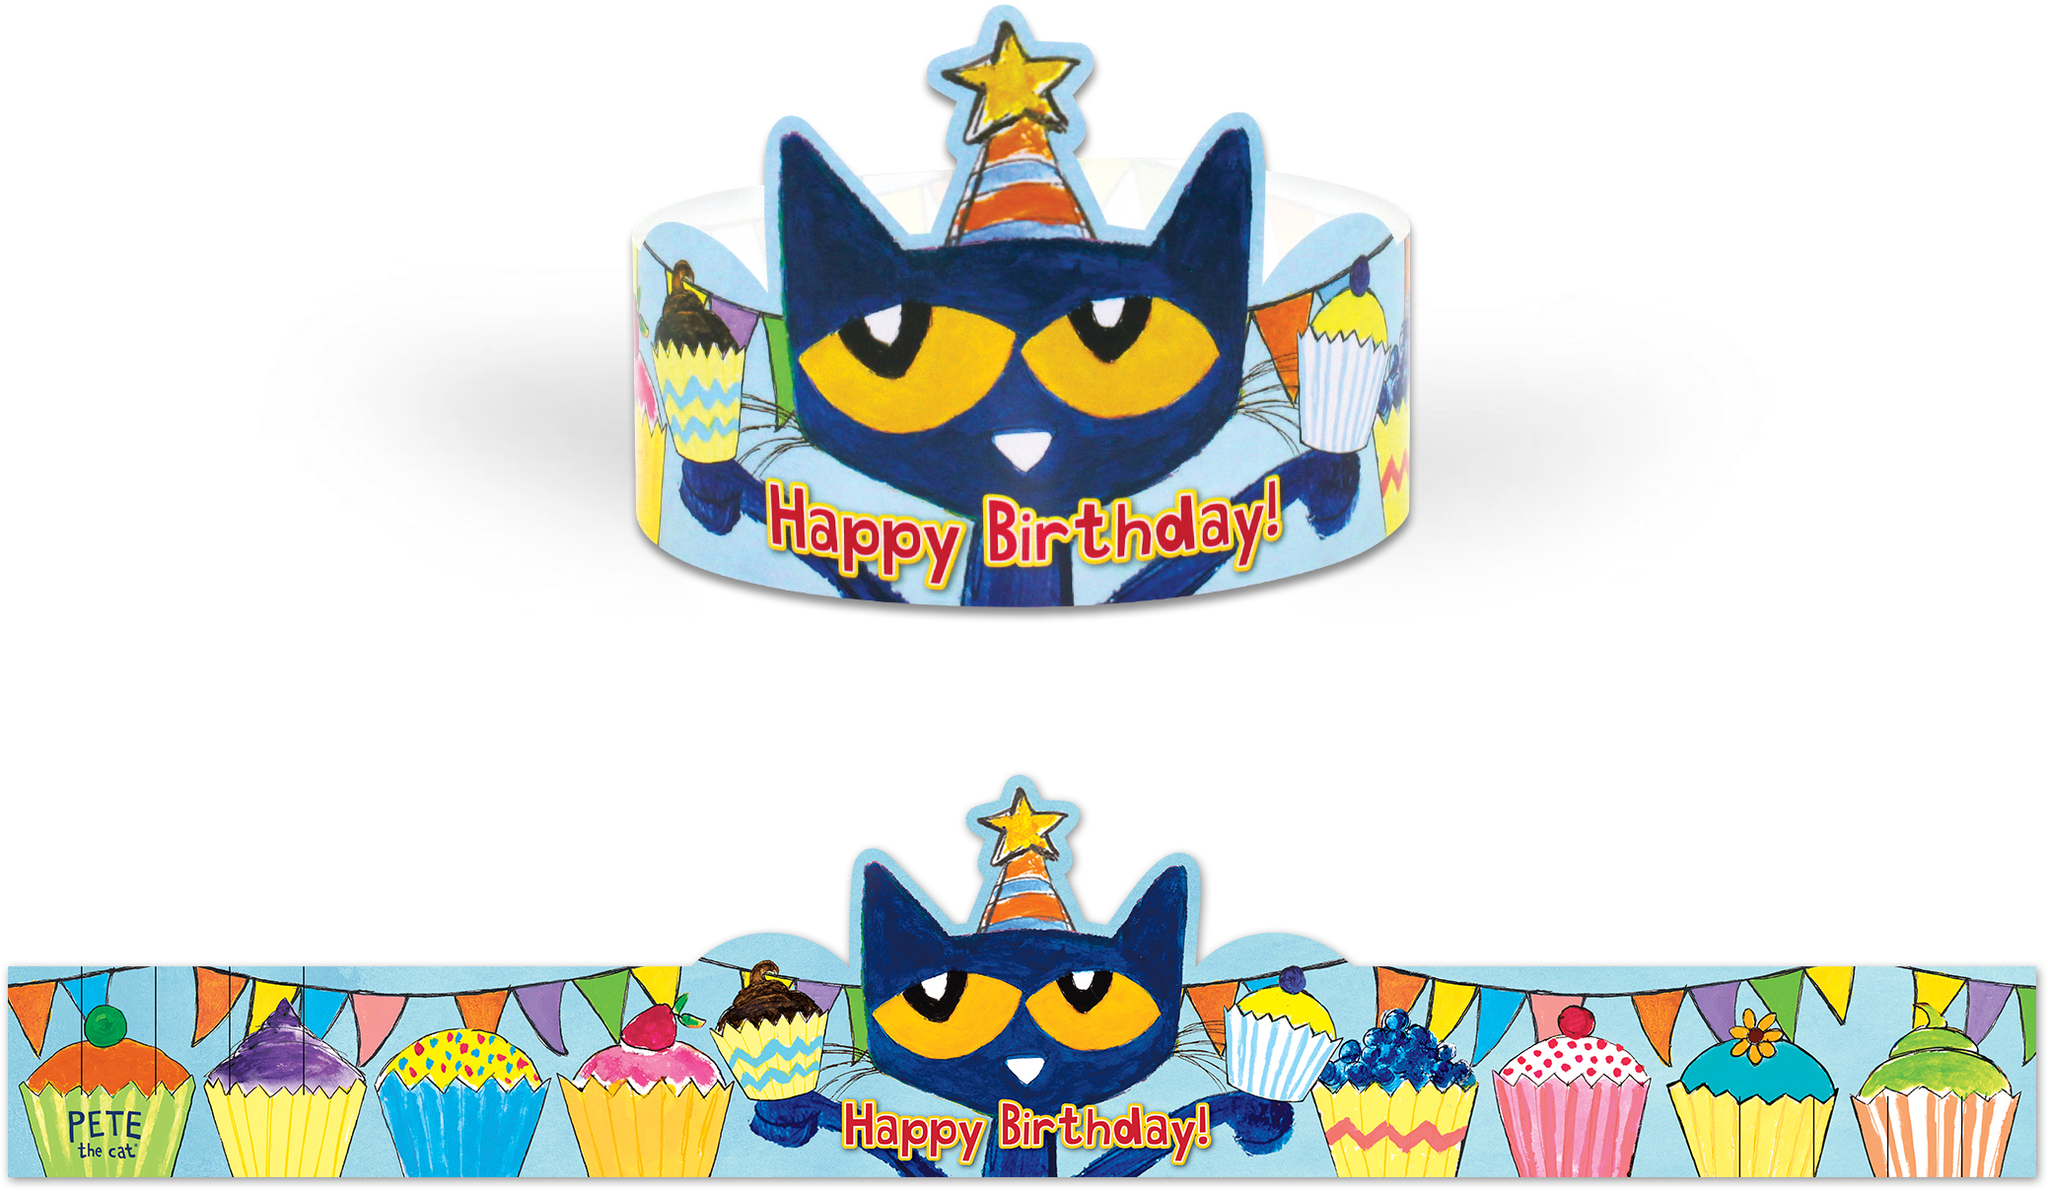 Pete the Cat® Happy Birthday Crowns